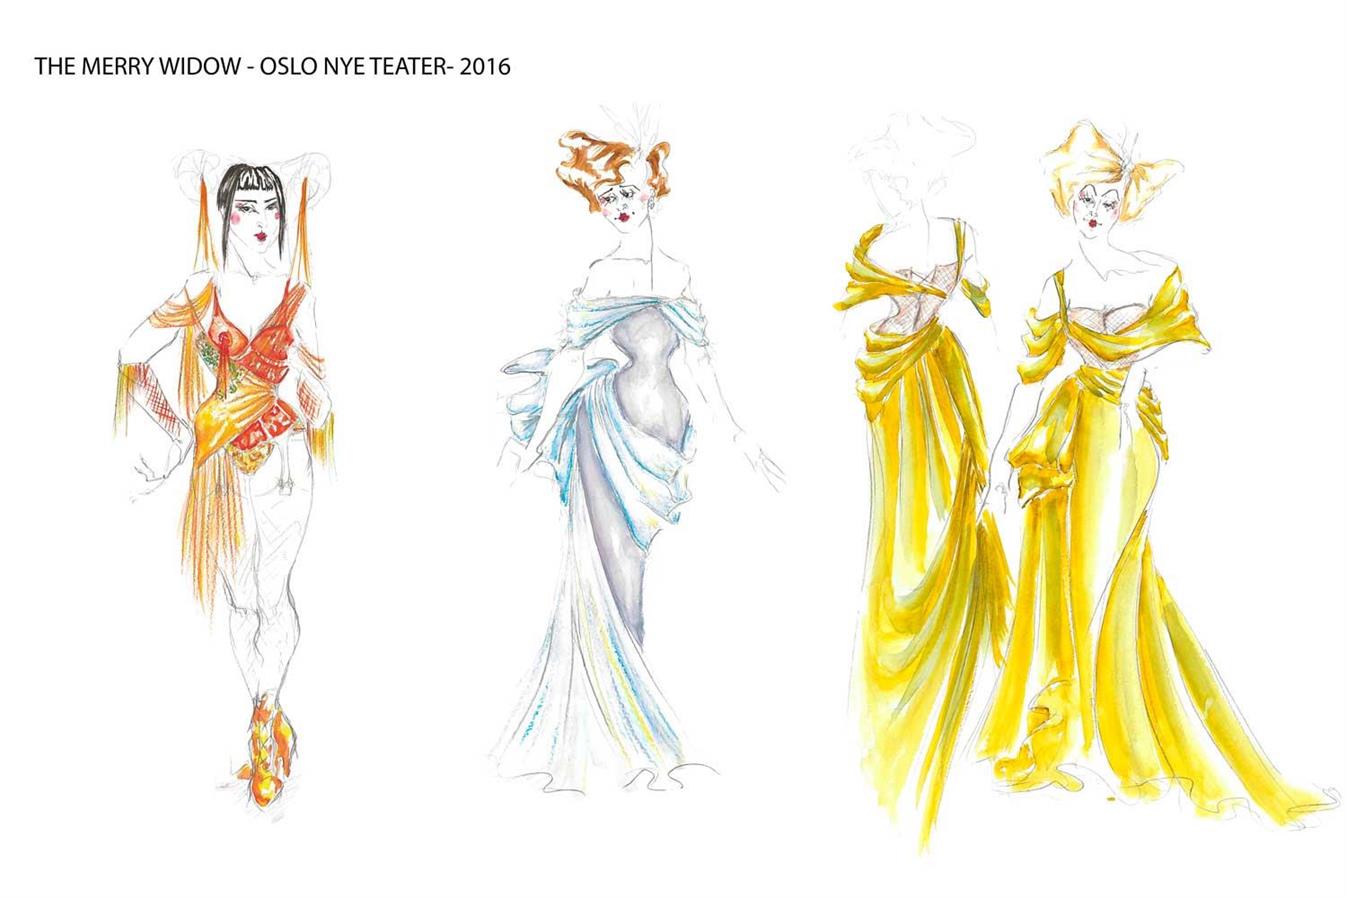 The Merry Widow - Oslo Nye Teater - Director: Svein Sturla Hugnes - Costume design: Christina Lovery